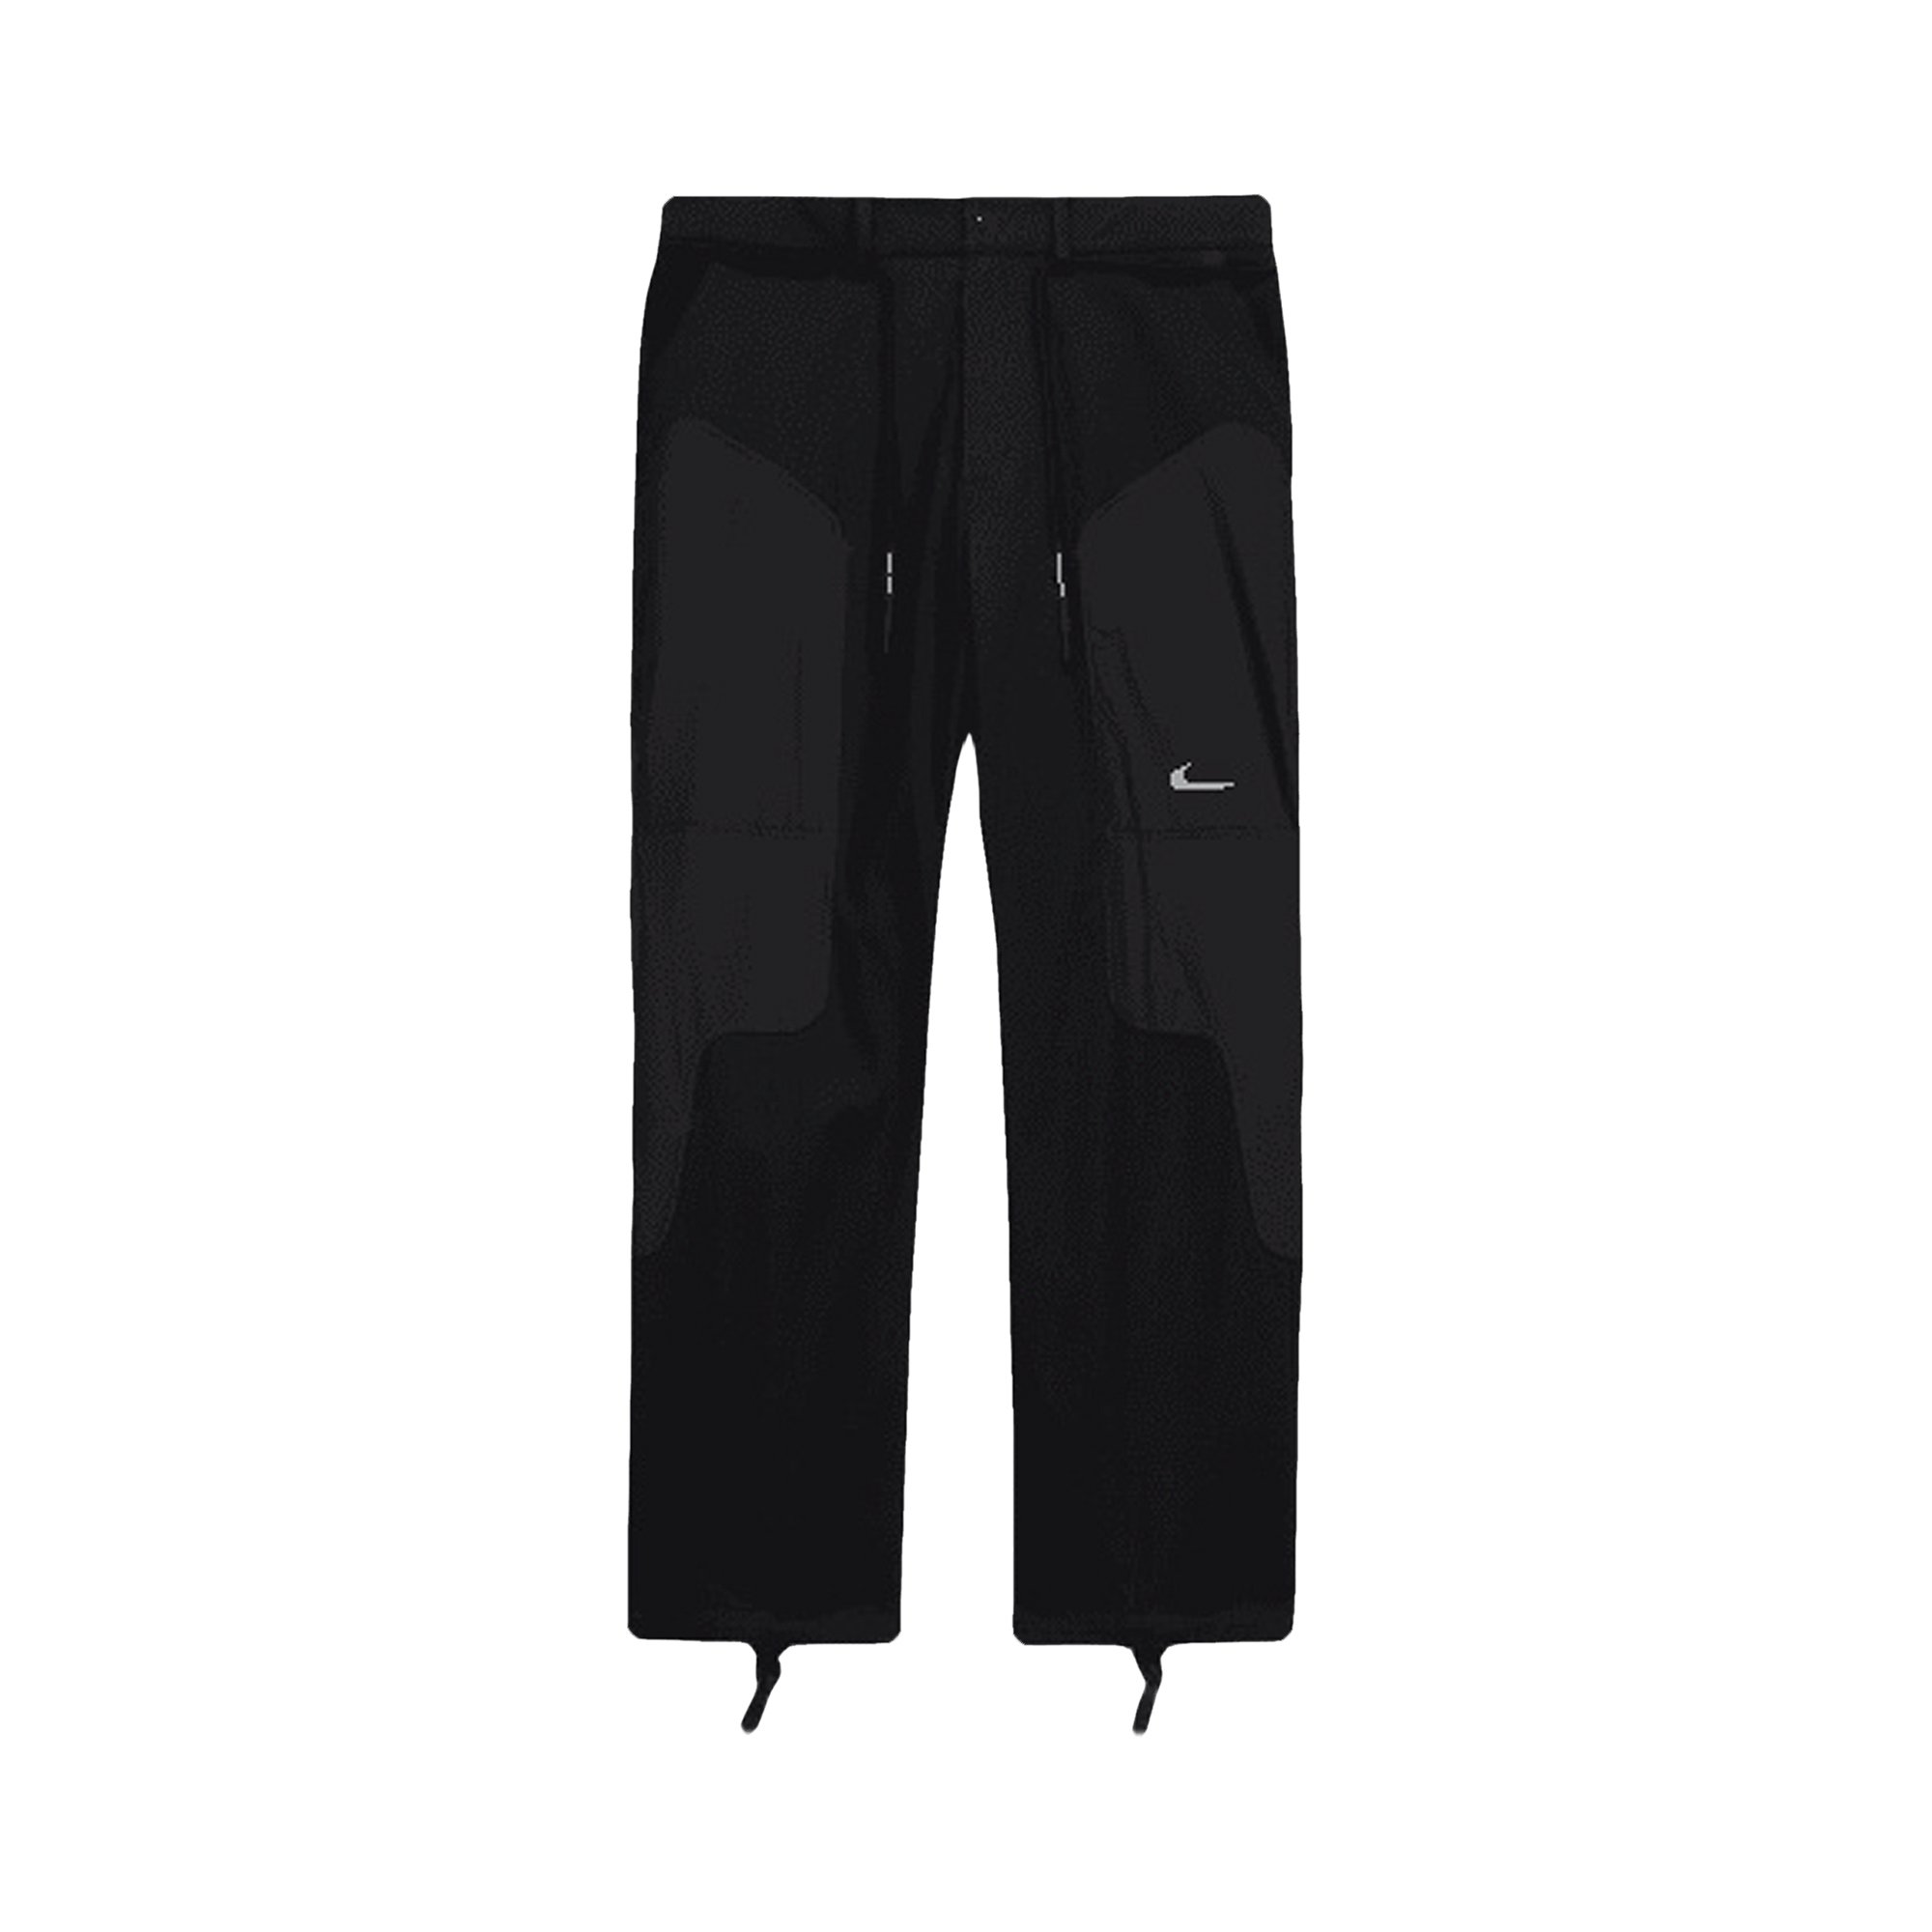 OFF-WHITE / Nike Pants "Black"